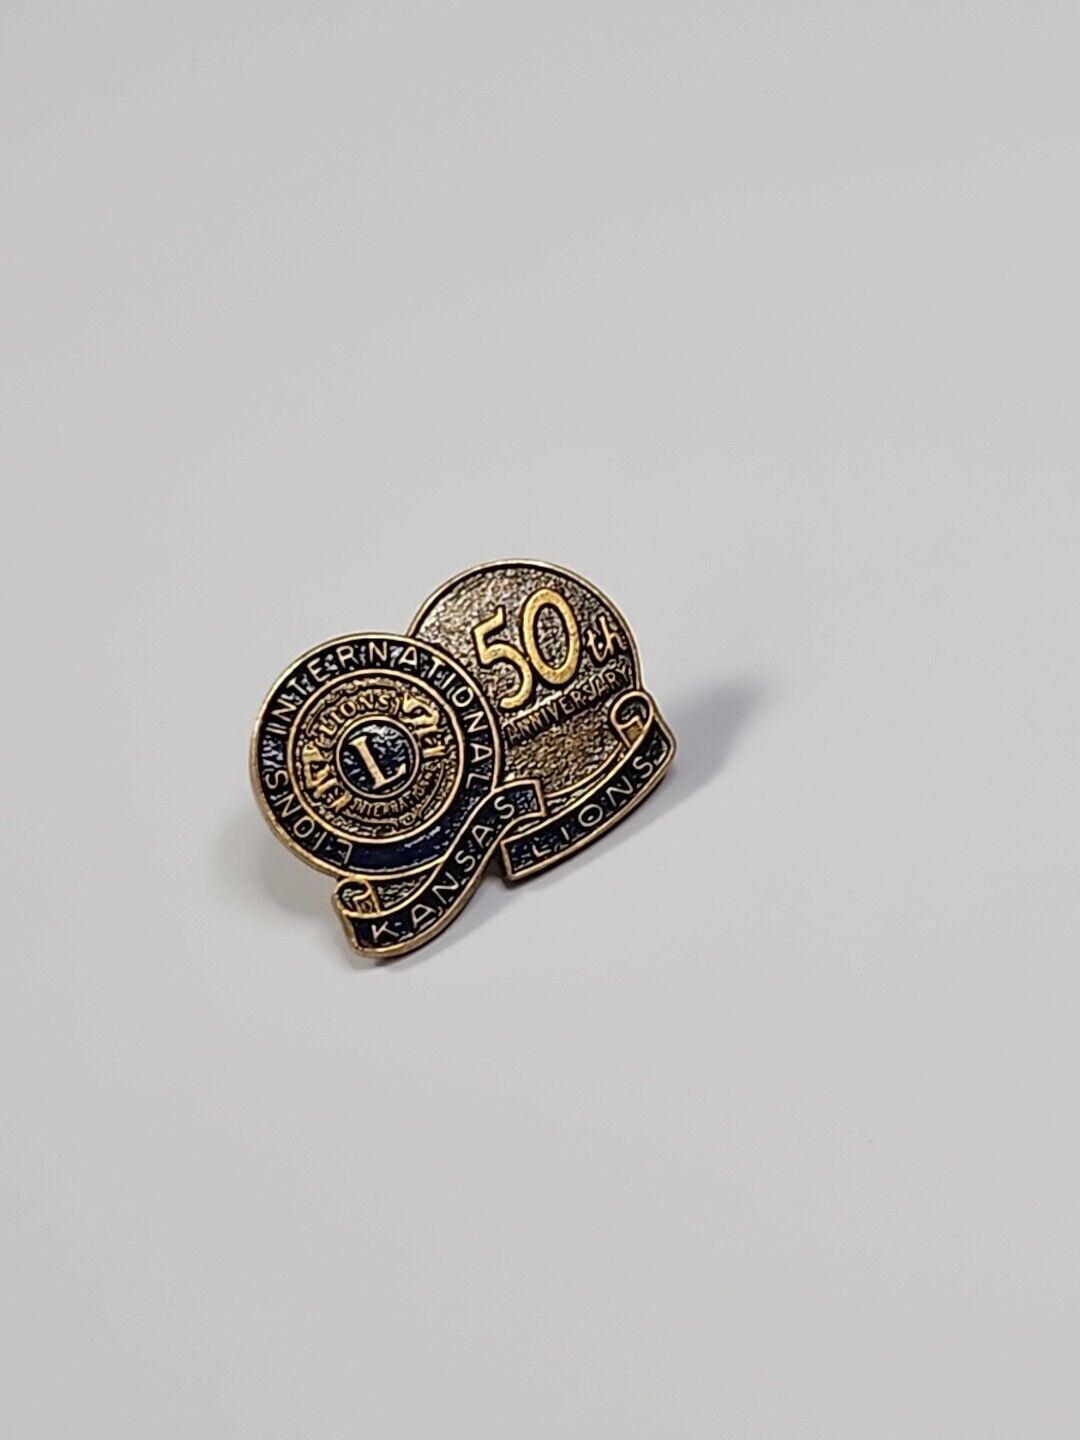 Kansas Lions International 50th Anniversary Souvenir Lapel Pin